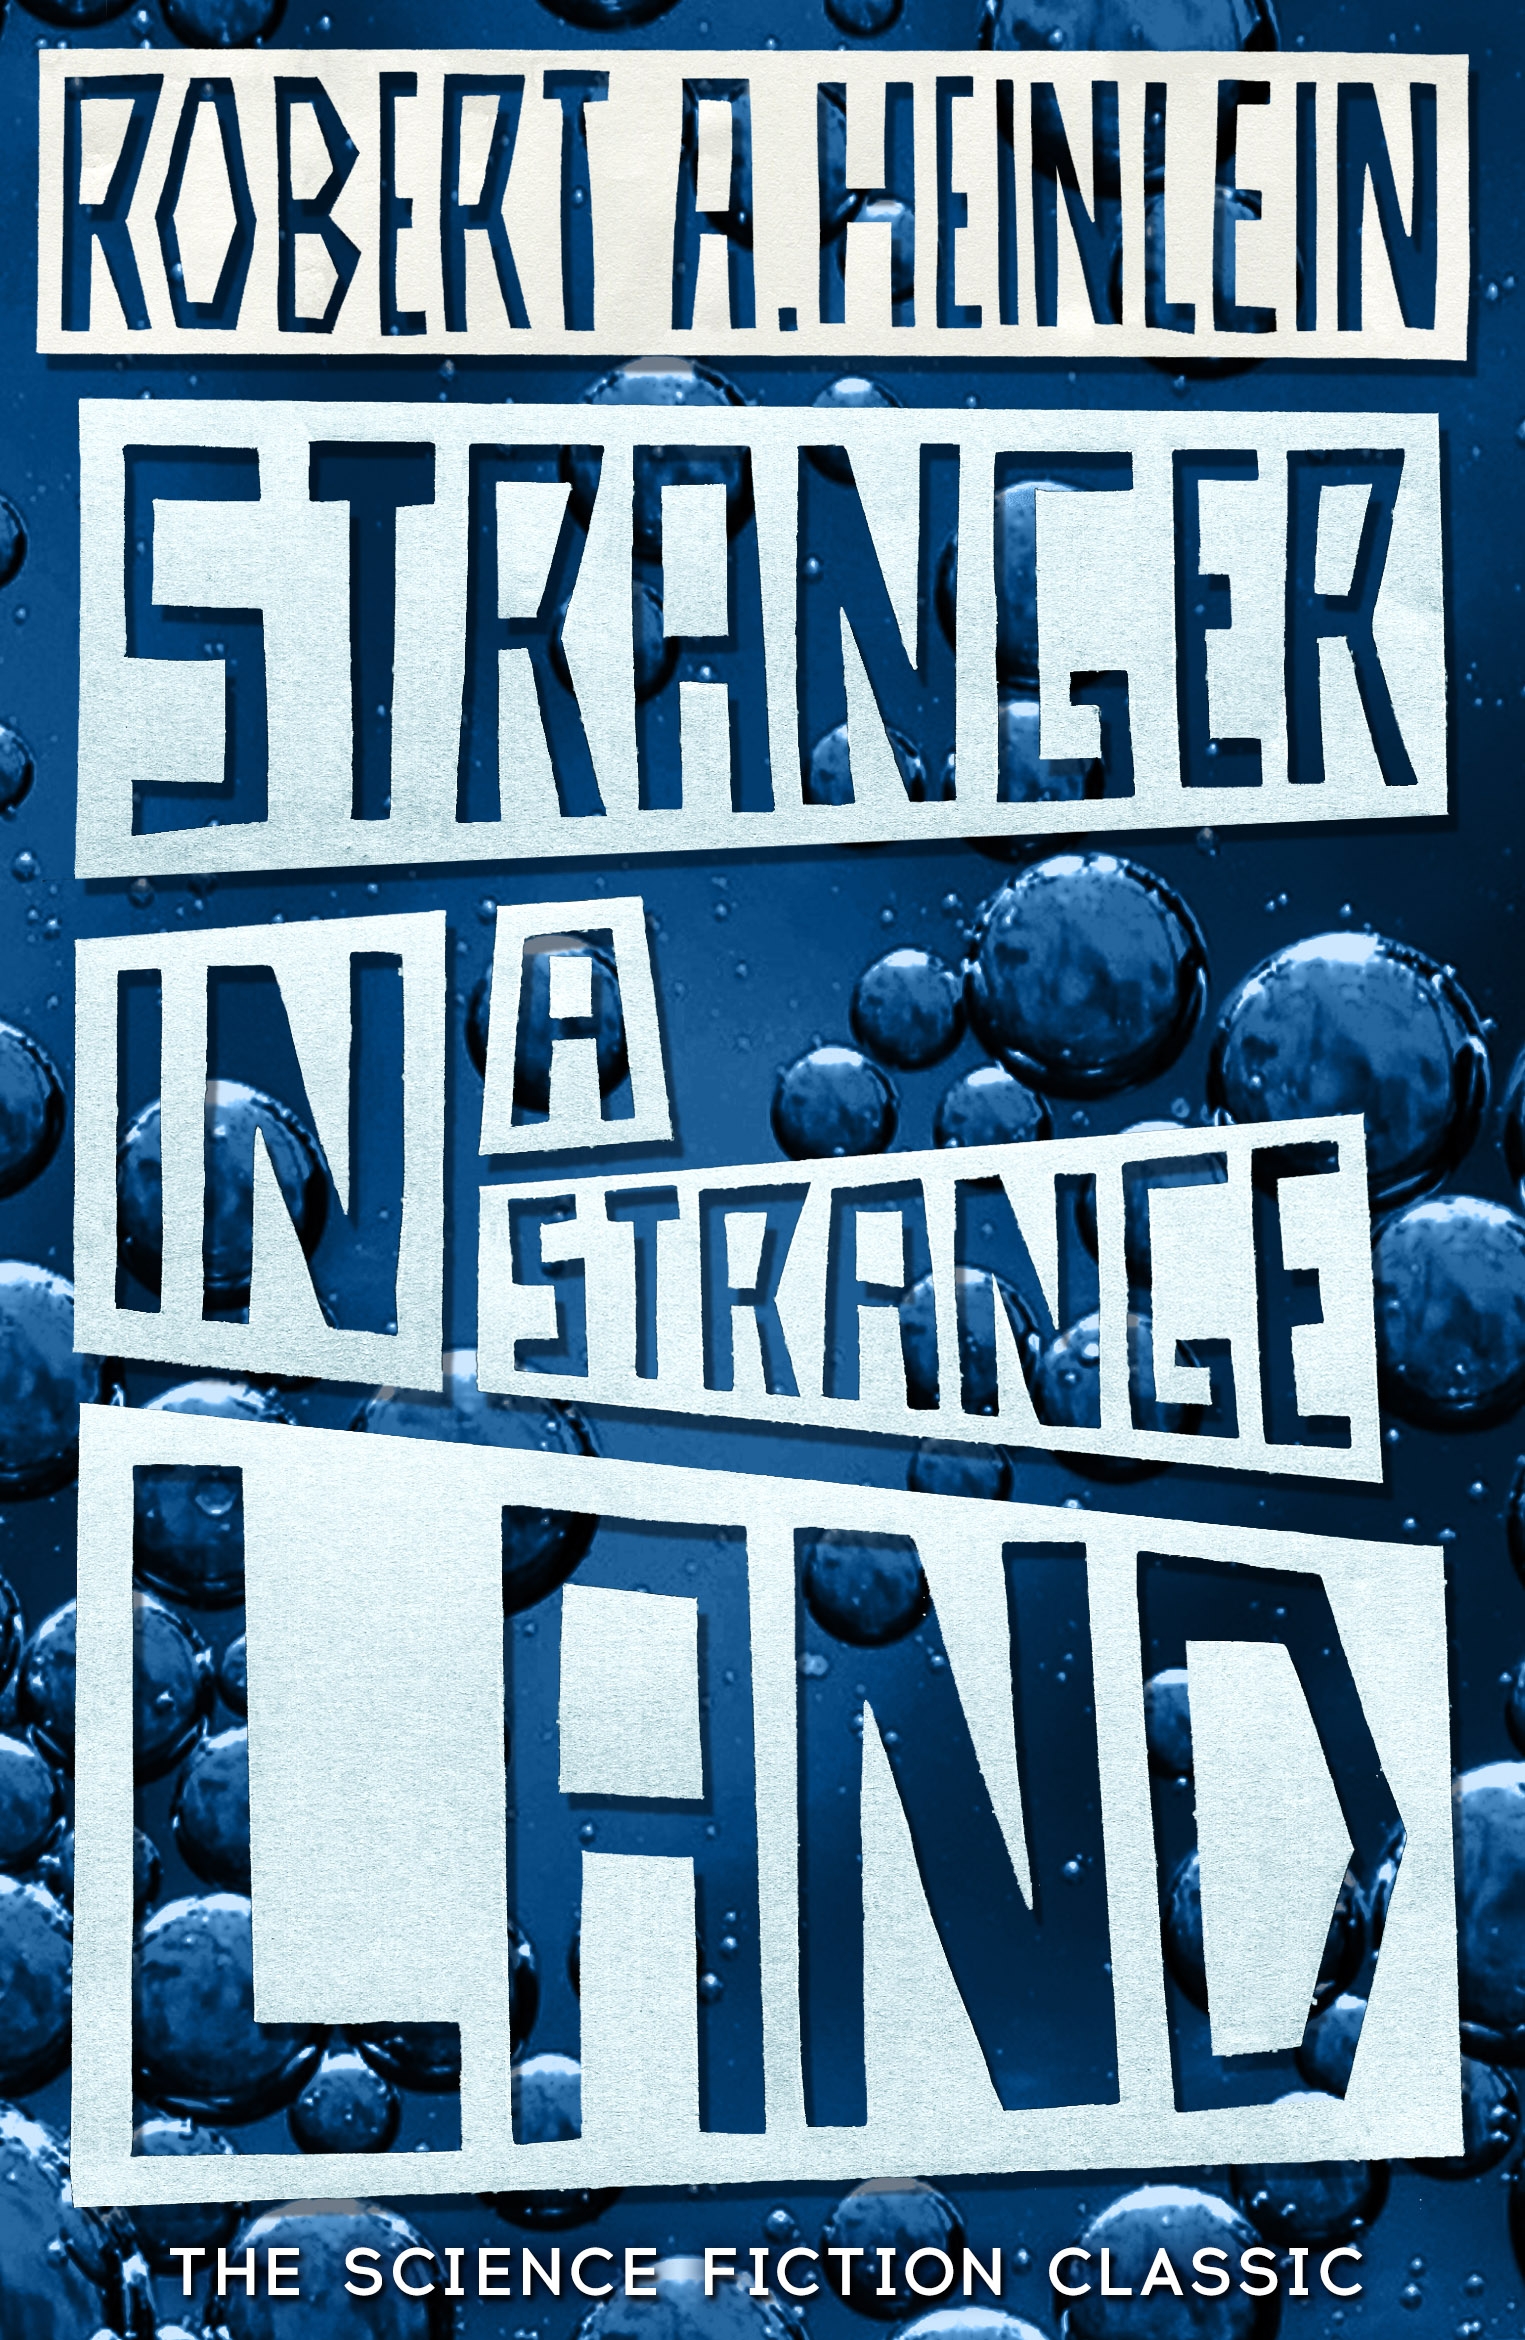 strangers in a strange land walkthrough text